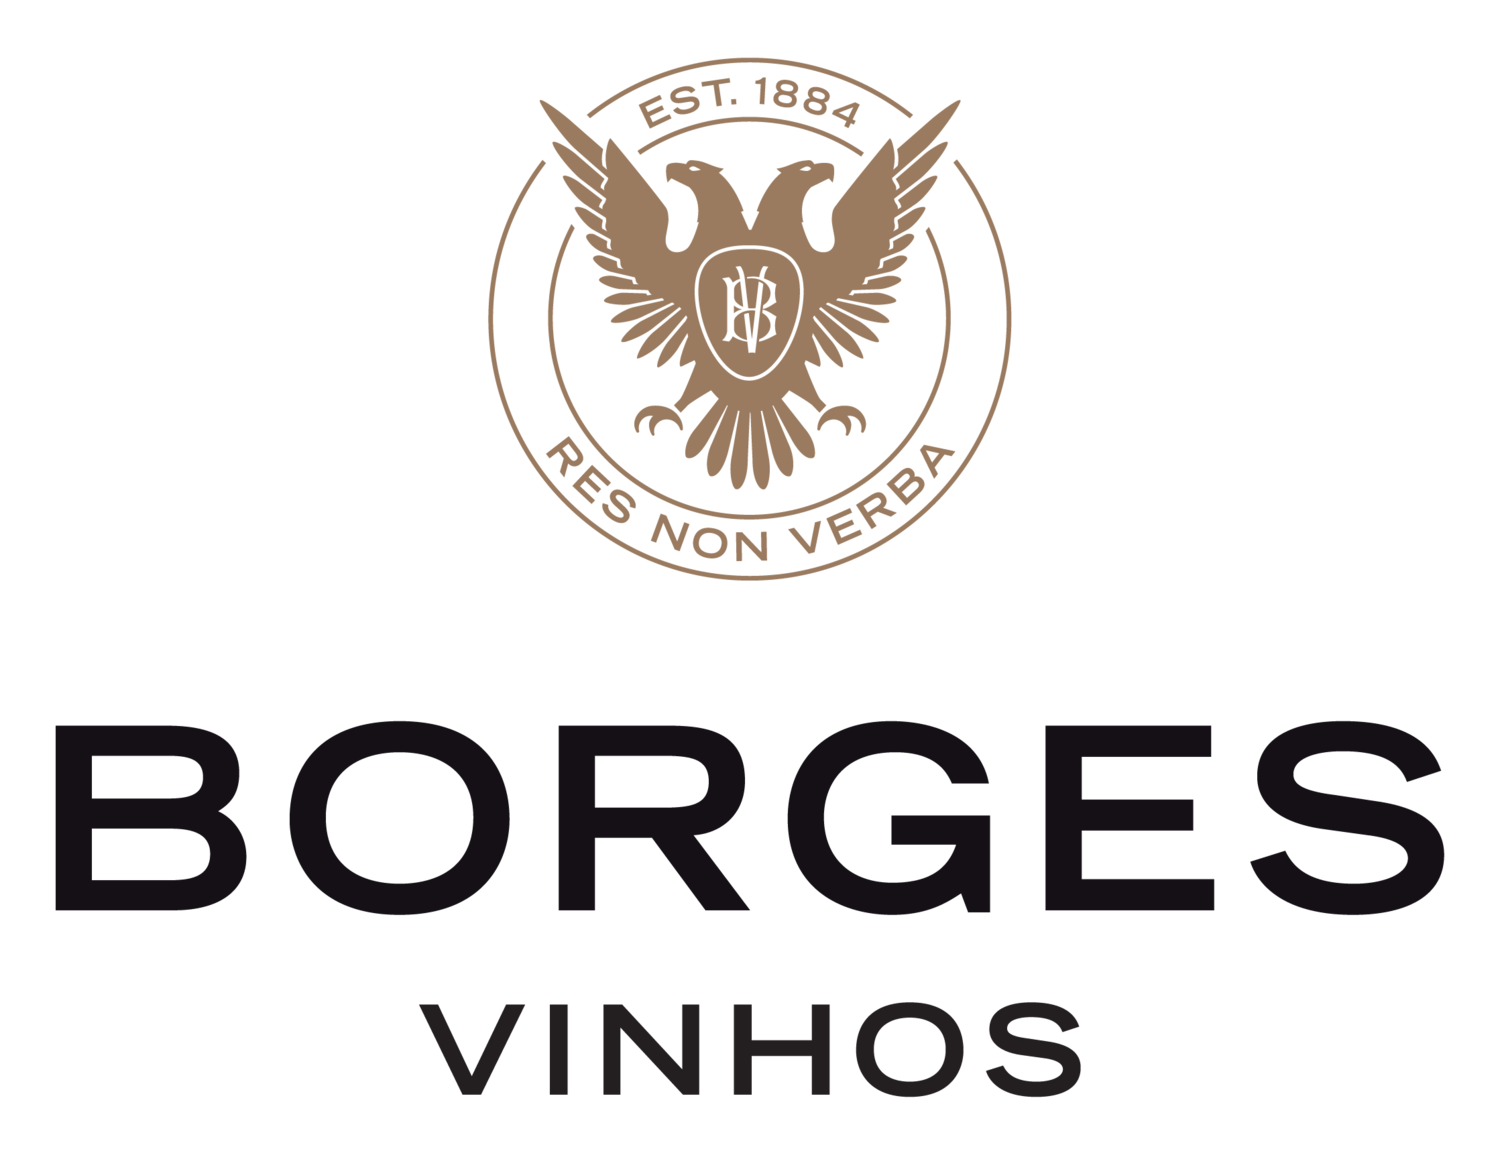 Borges - Vinhos